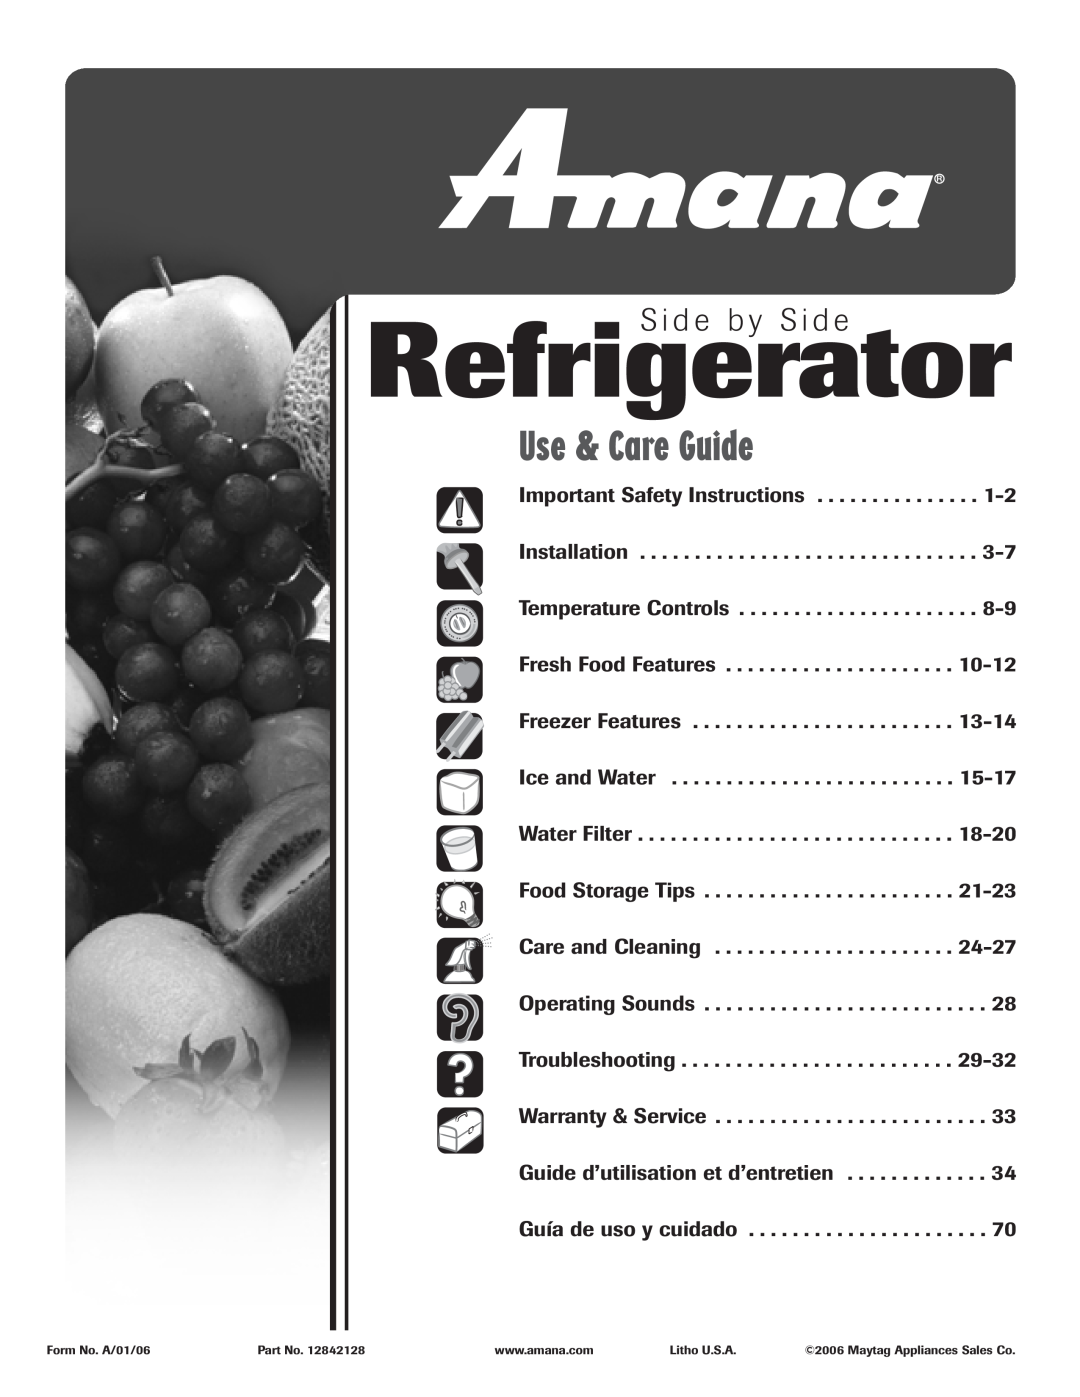 Amana ASD2624HEQ important safety instructions Refrigerator, Use & Care Guide, S i d e b y S i d e 